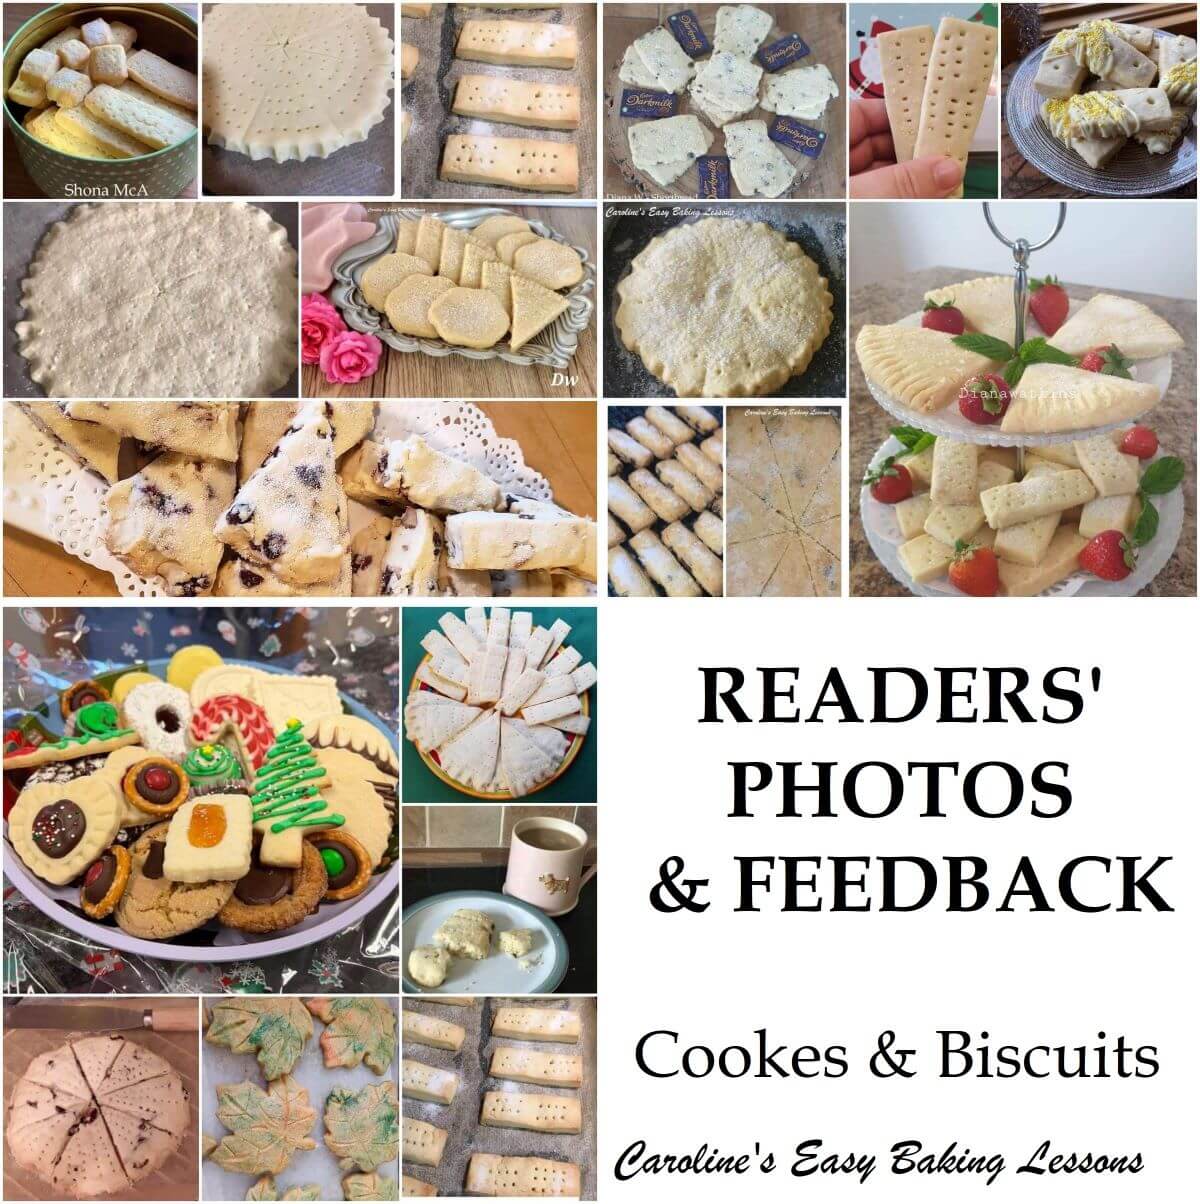 Readers’ Photos & Feedback Page – Biscuits & Cookies